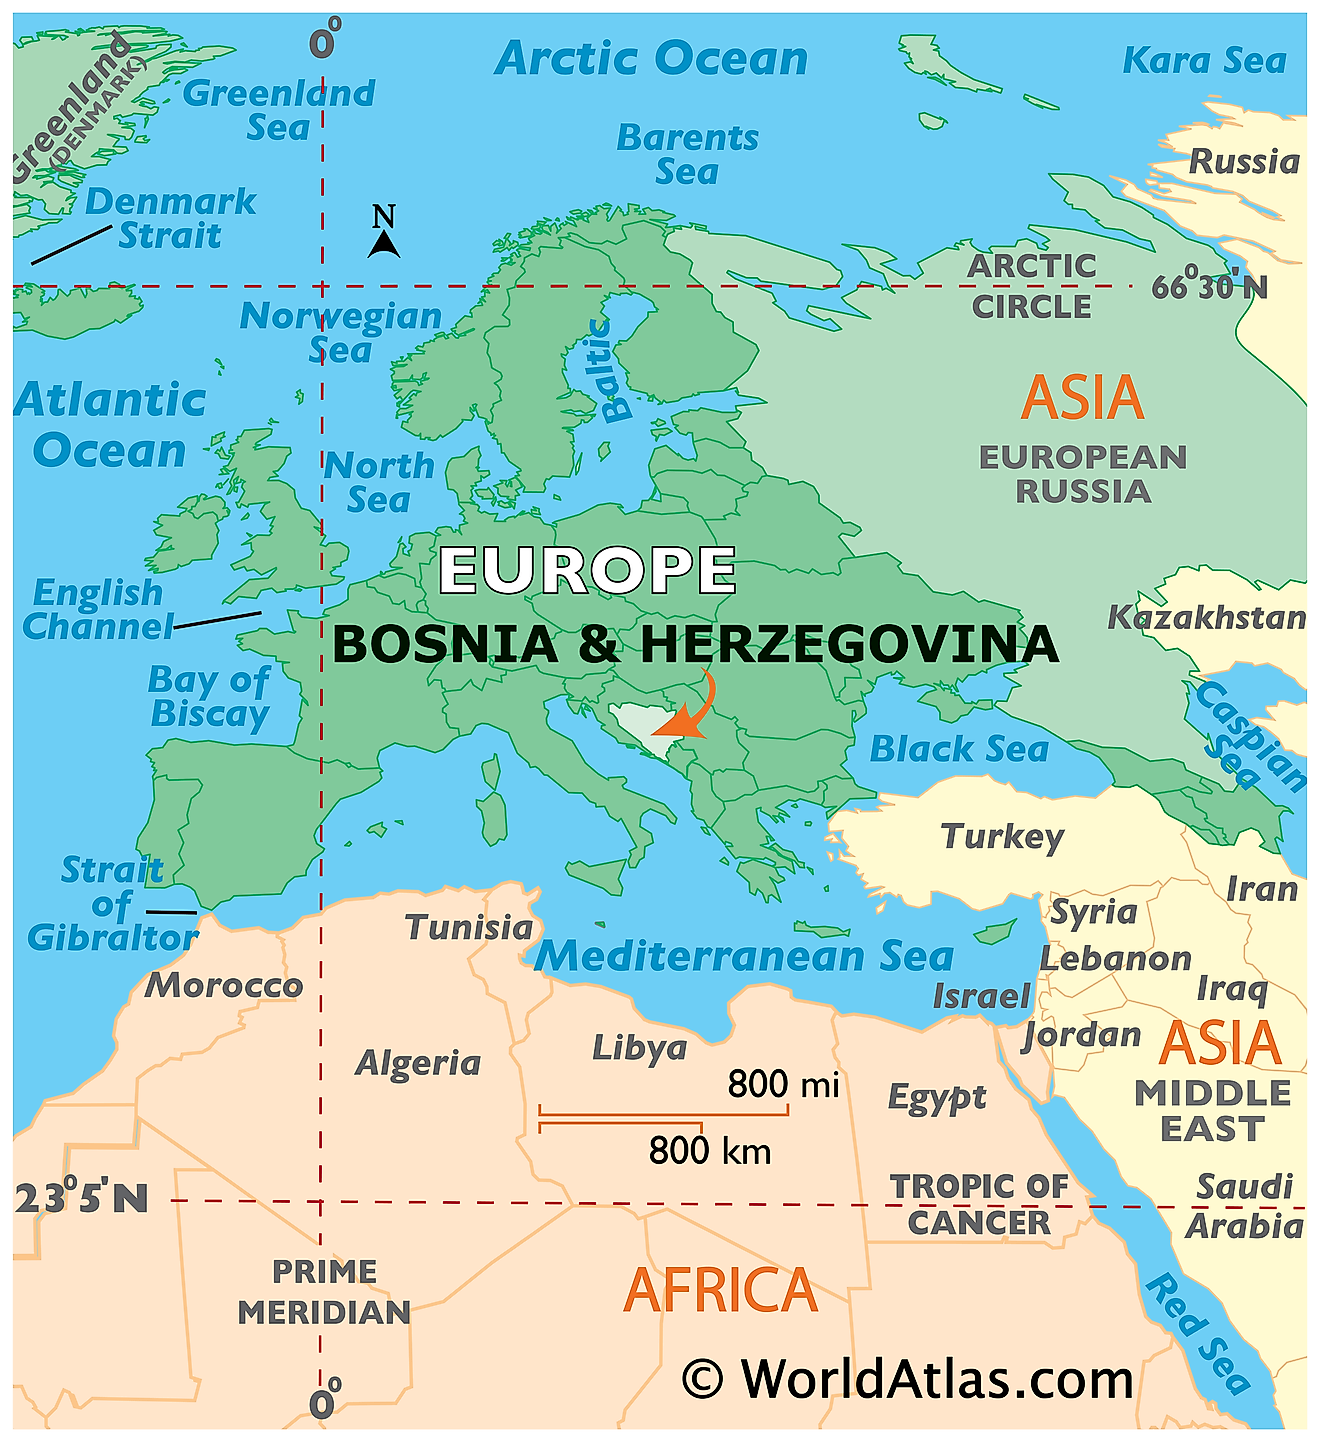 Bosnia and Herzegovina Maps & Facts - World Atlas